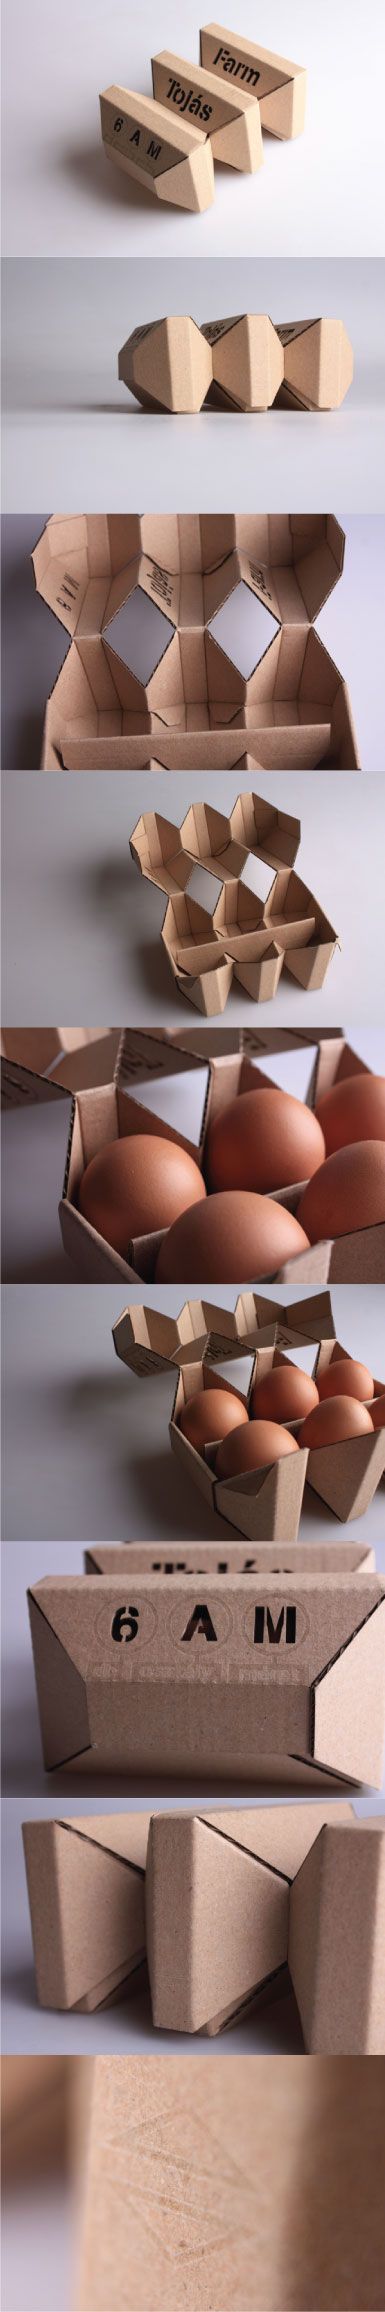 egg box by Ádám Török